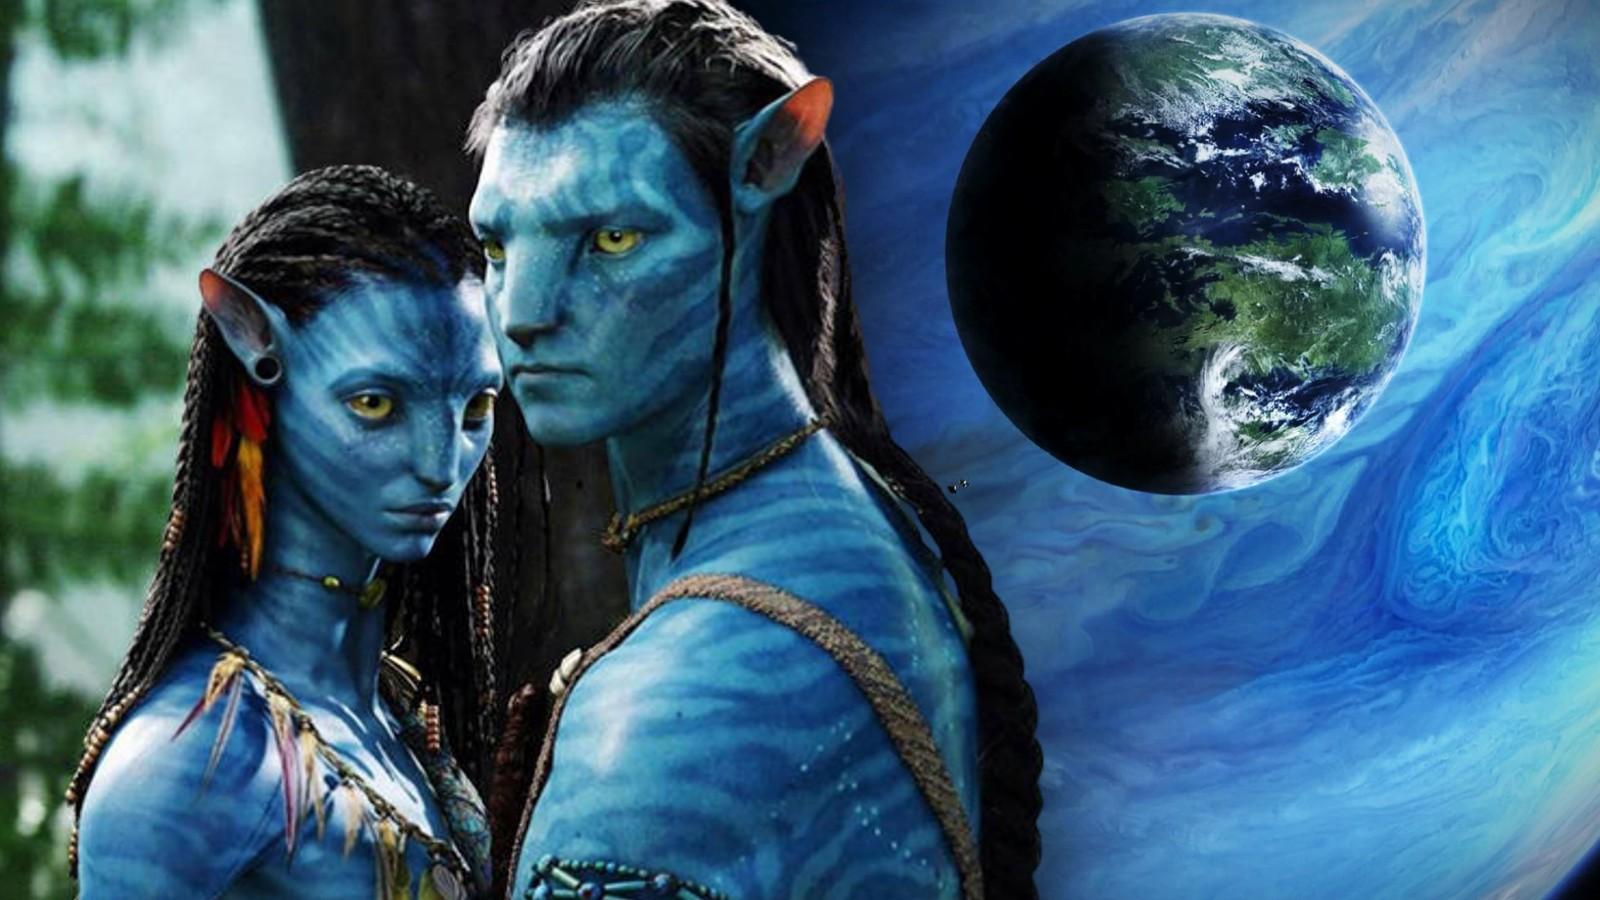 A still from Avatar of Neytiri, Jake Sully, and Pandora